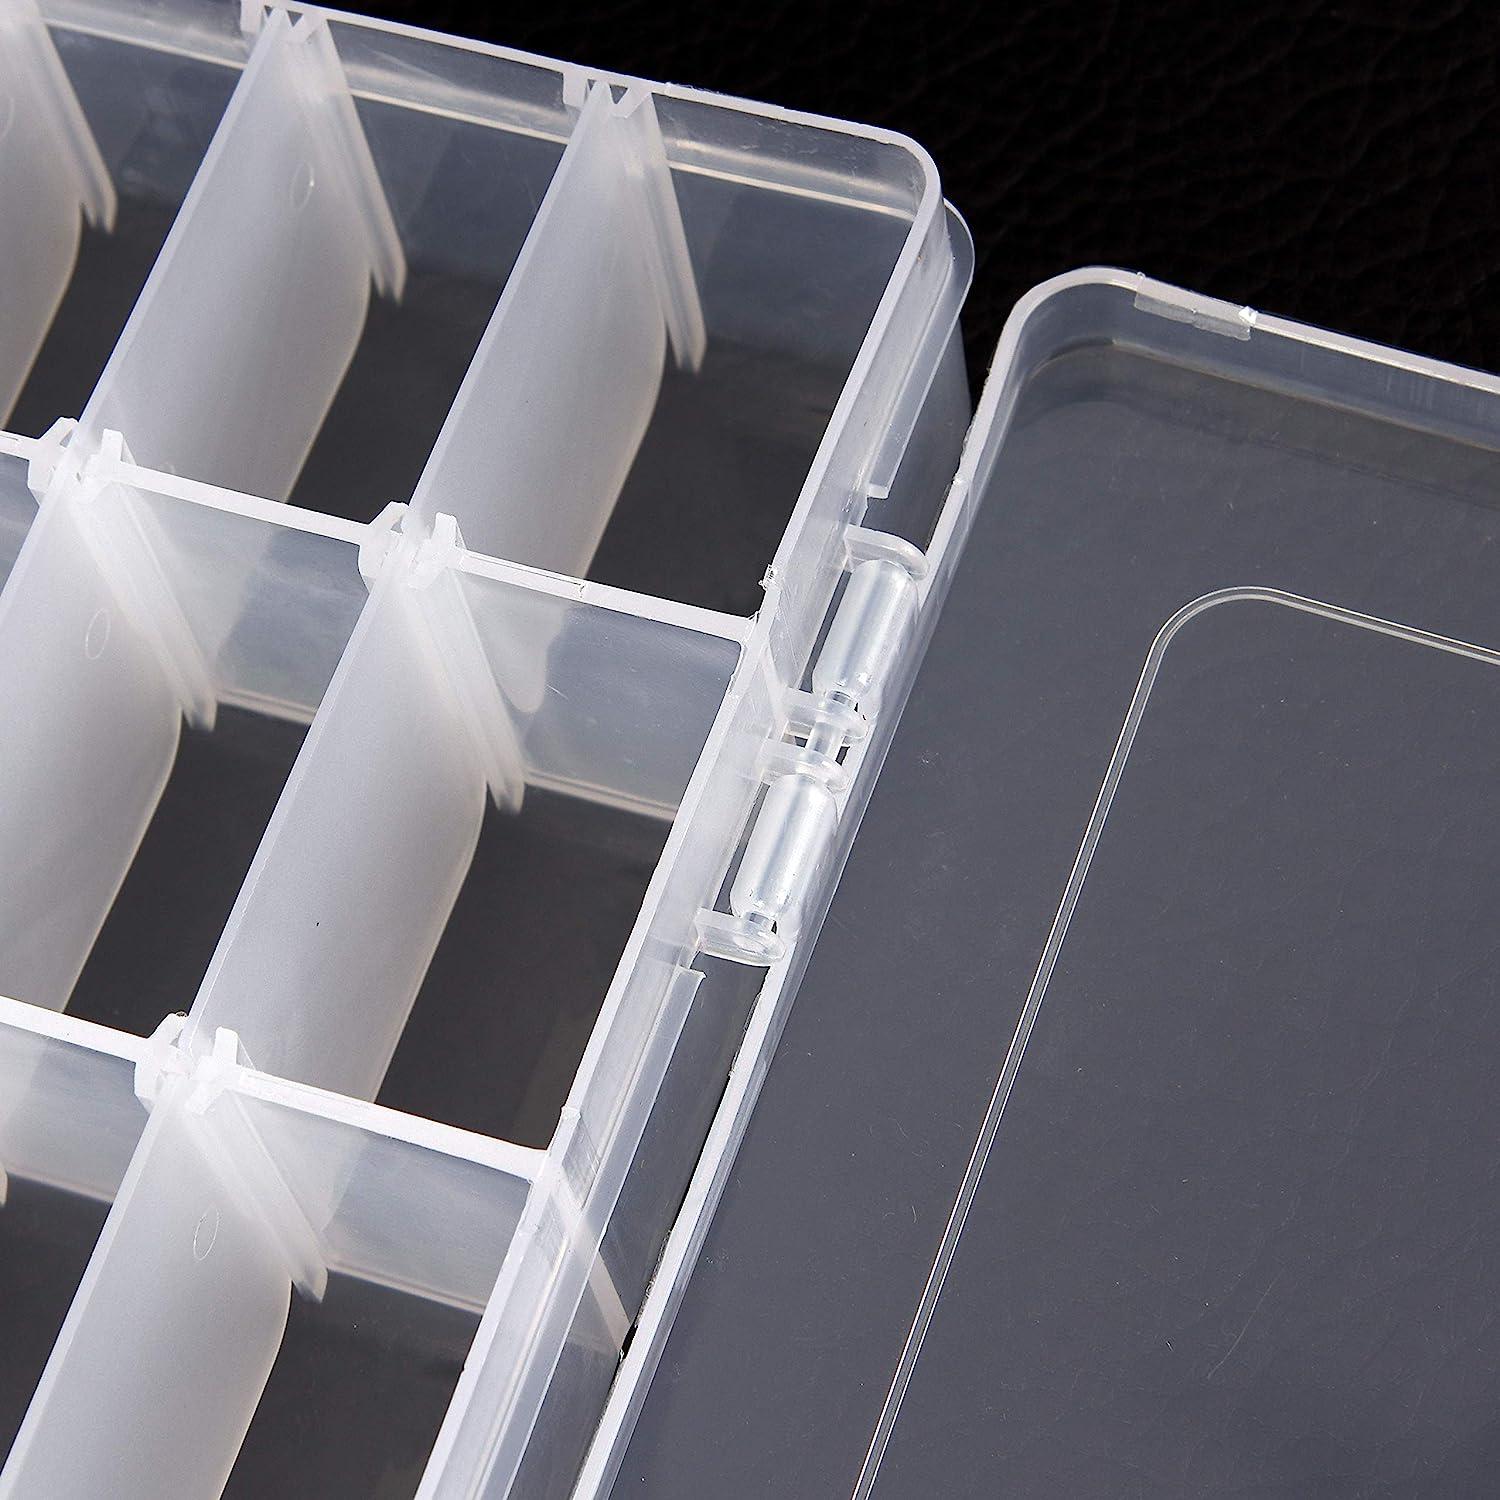 Snowkingdom Large 15 Grid Clear Organizer Box Adjustable Dividers